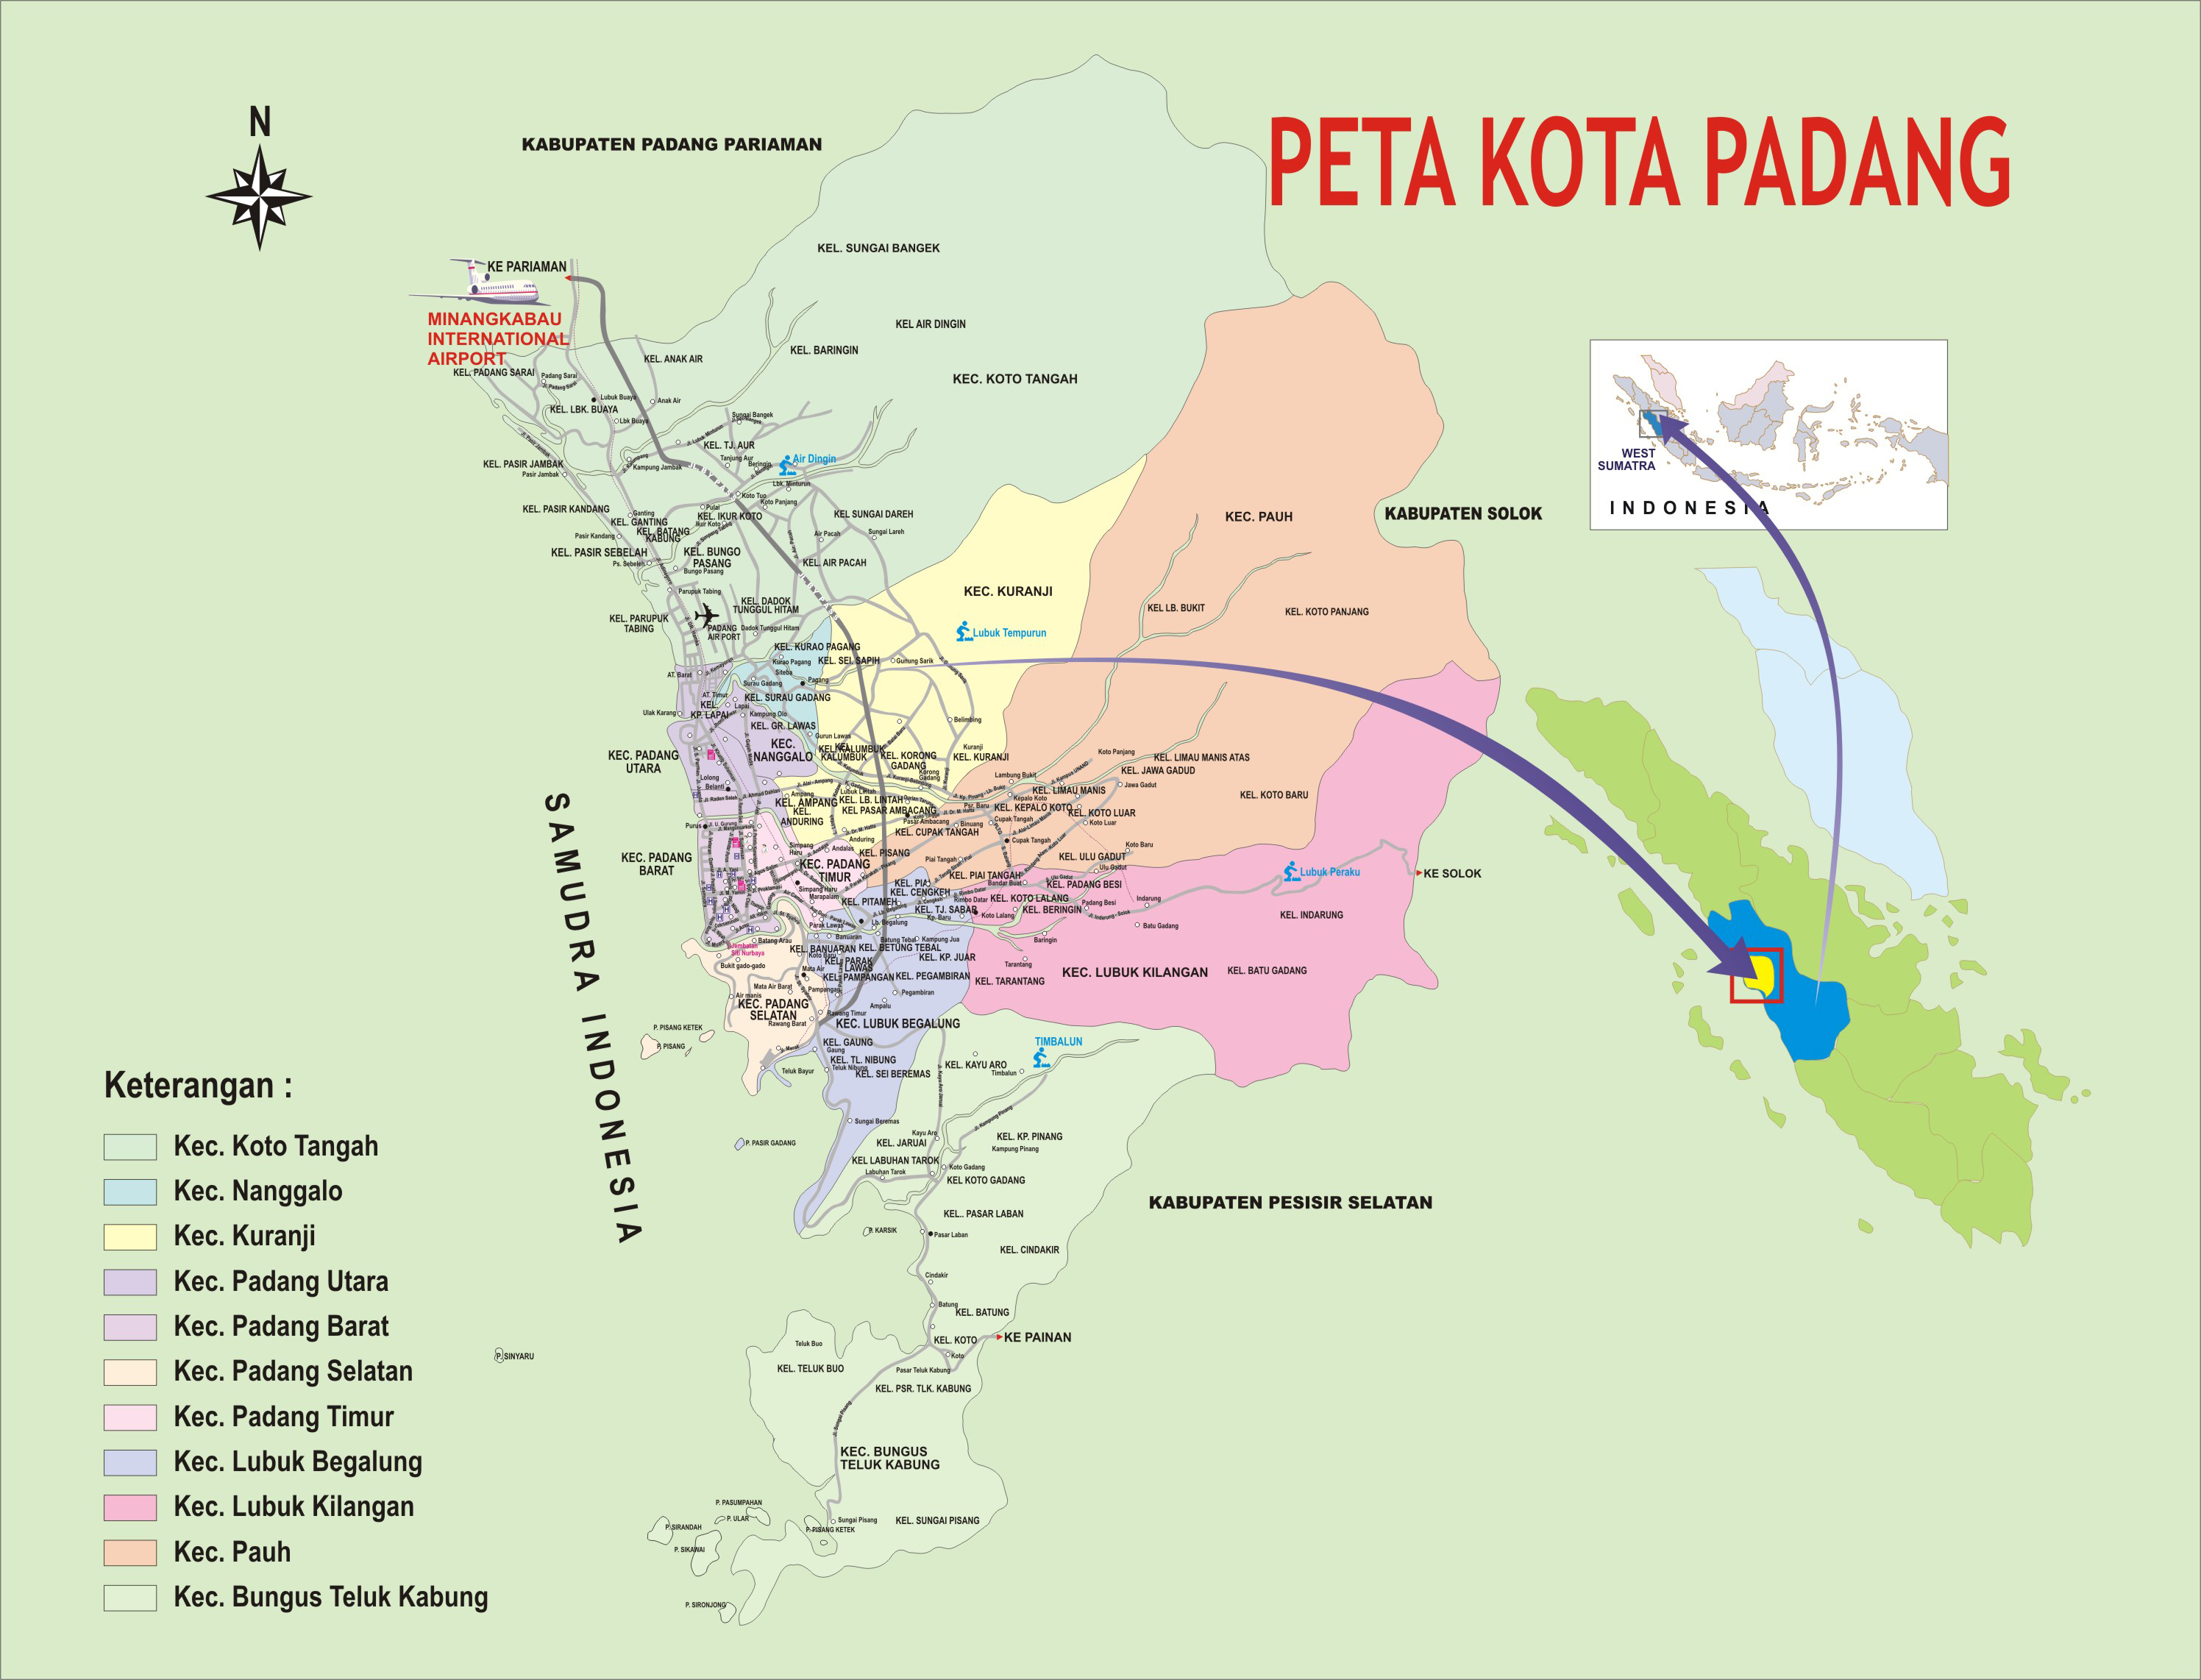 padang tourism  West Sumatra, Indonesia  Halal Tourism Destination  Part 2